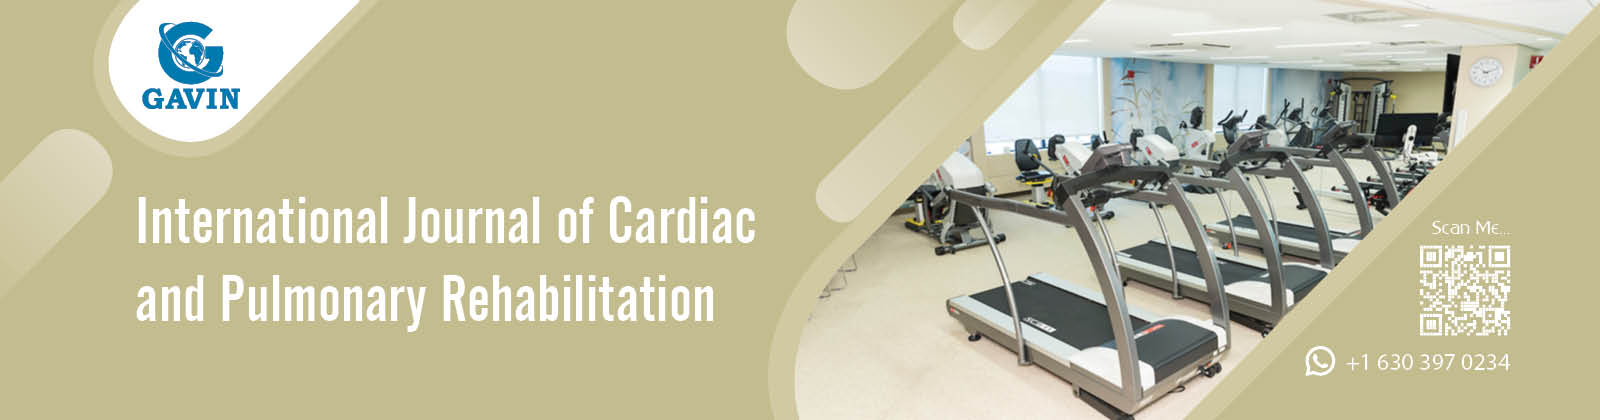 International Journal of Cardiac and Pulmonary Rehabilitation